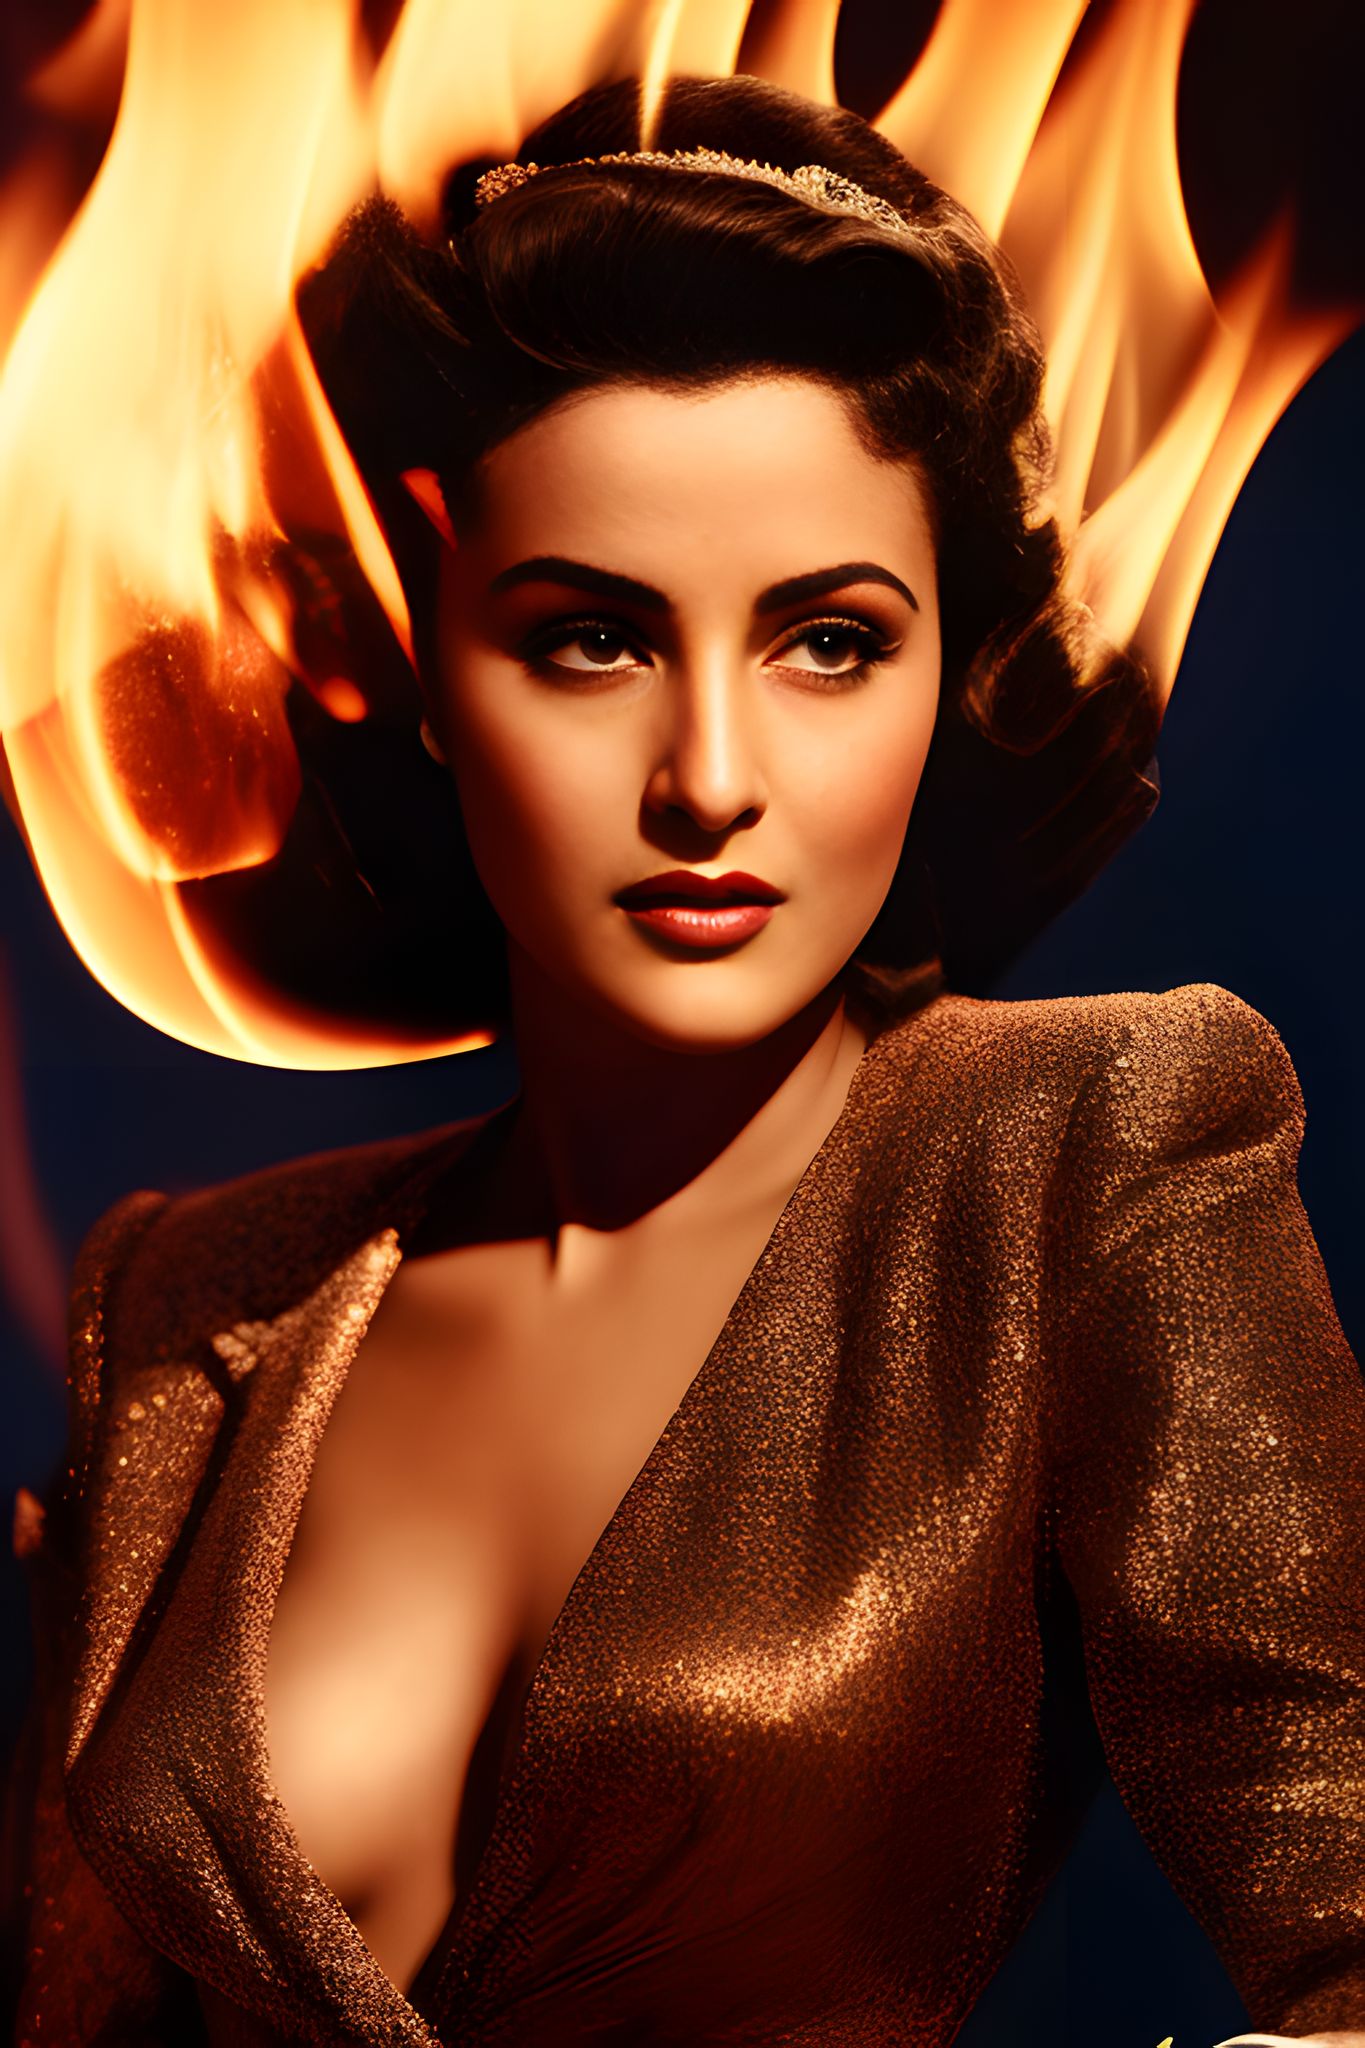 high-detail-portrait-of-a-Iranian-Actress-flames-u0mx